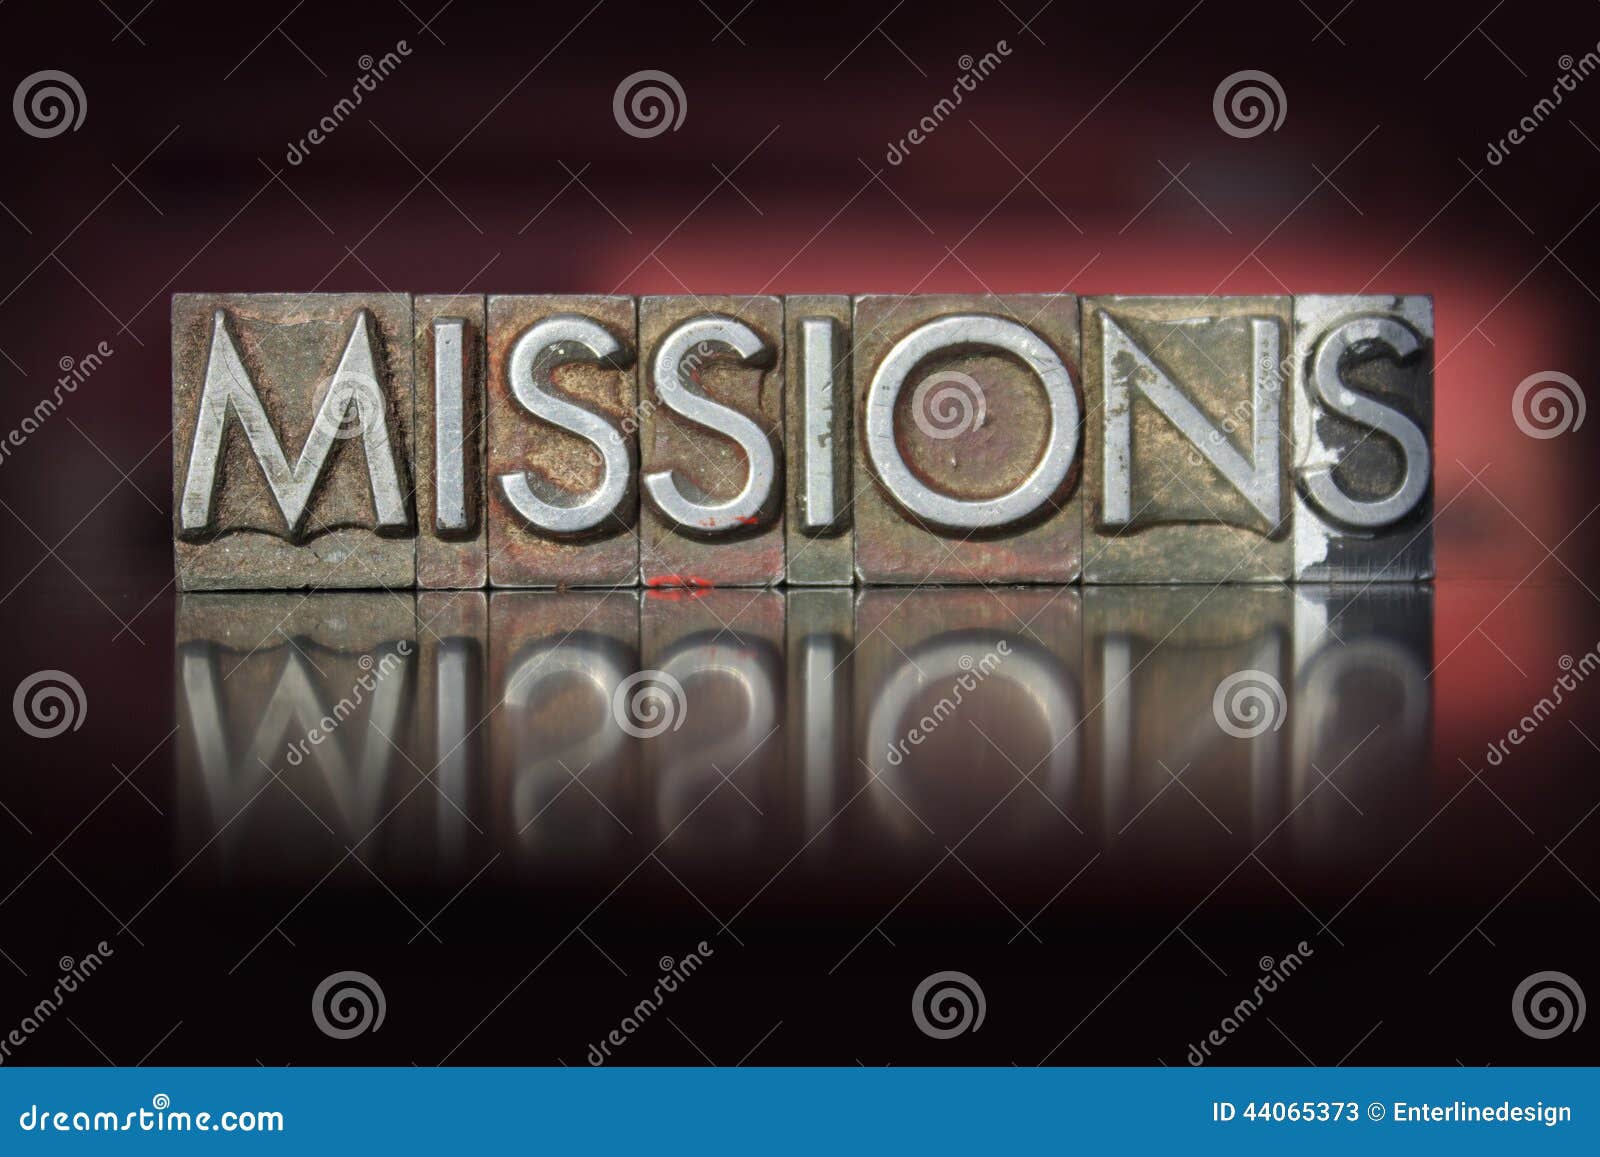 missions letterpress